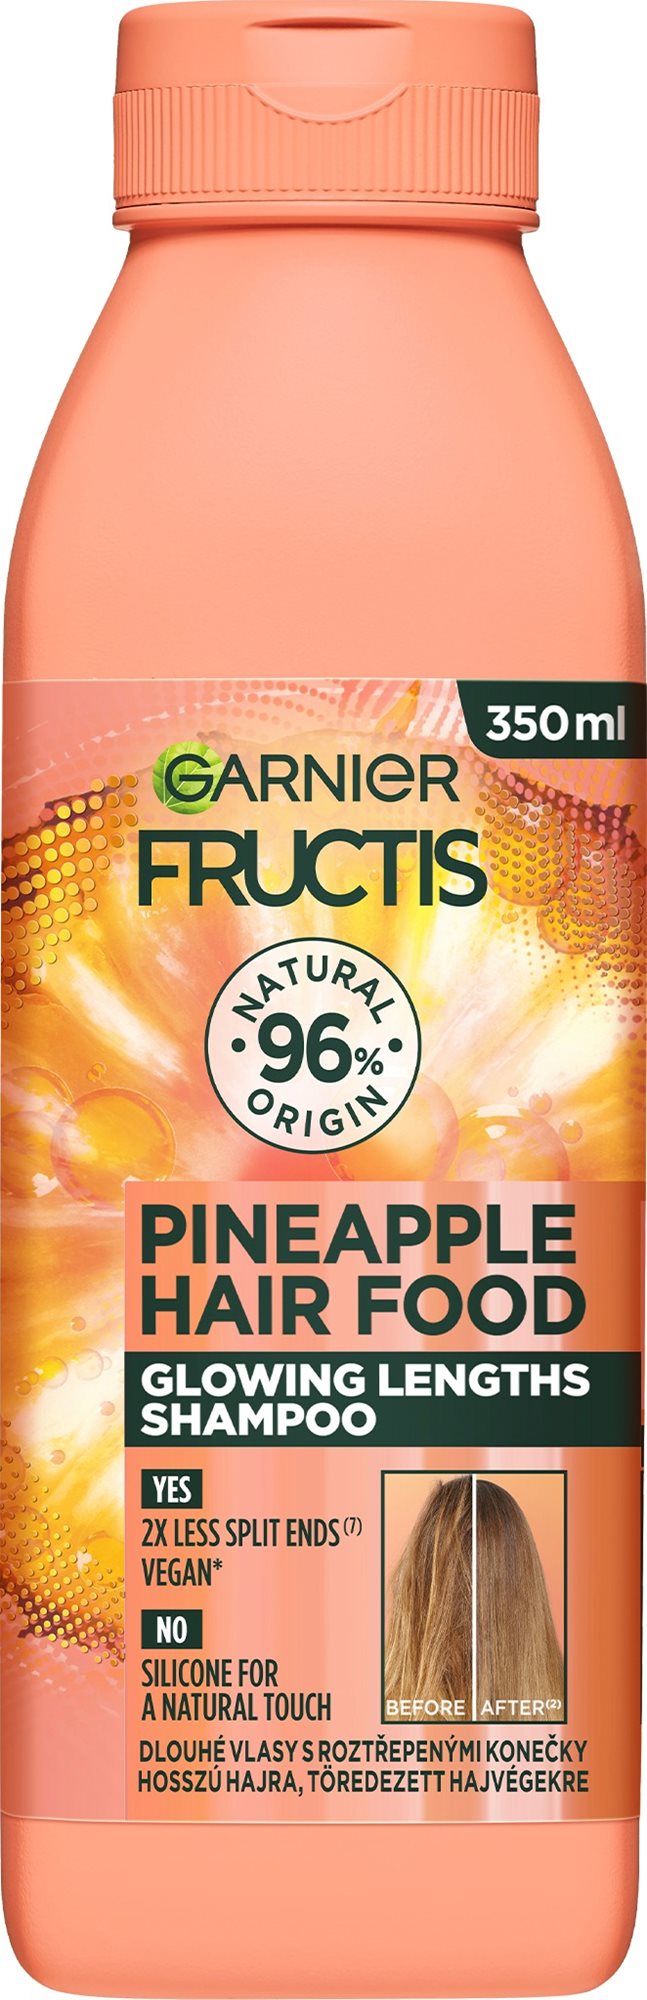 GARNIER Fructis Hair Food Pineapple Fényesítő sampon hosszú hajra 350 ml